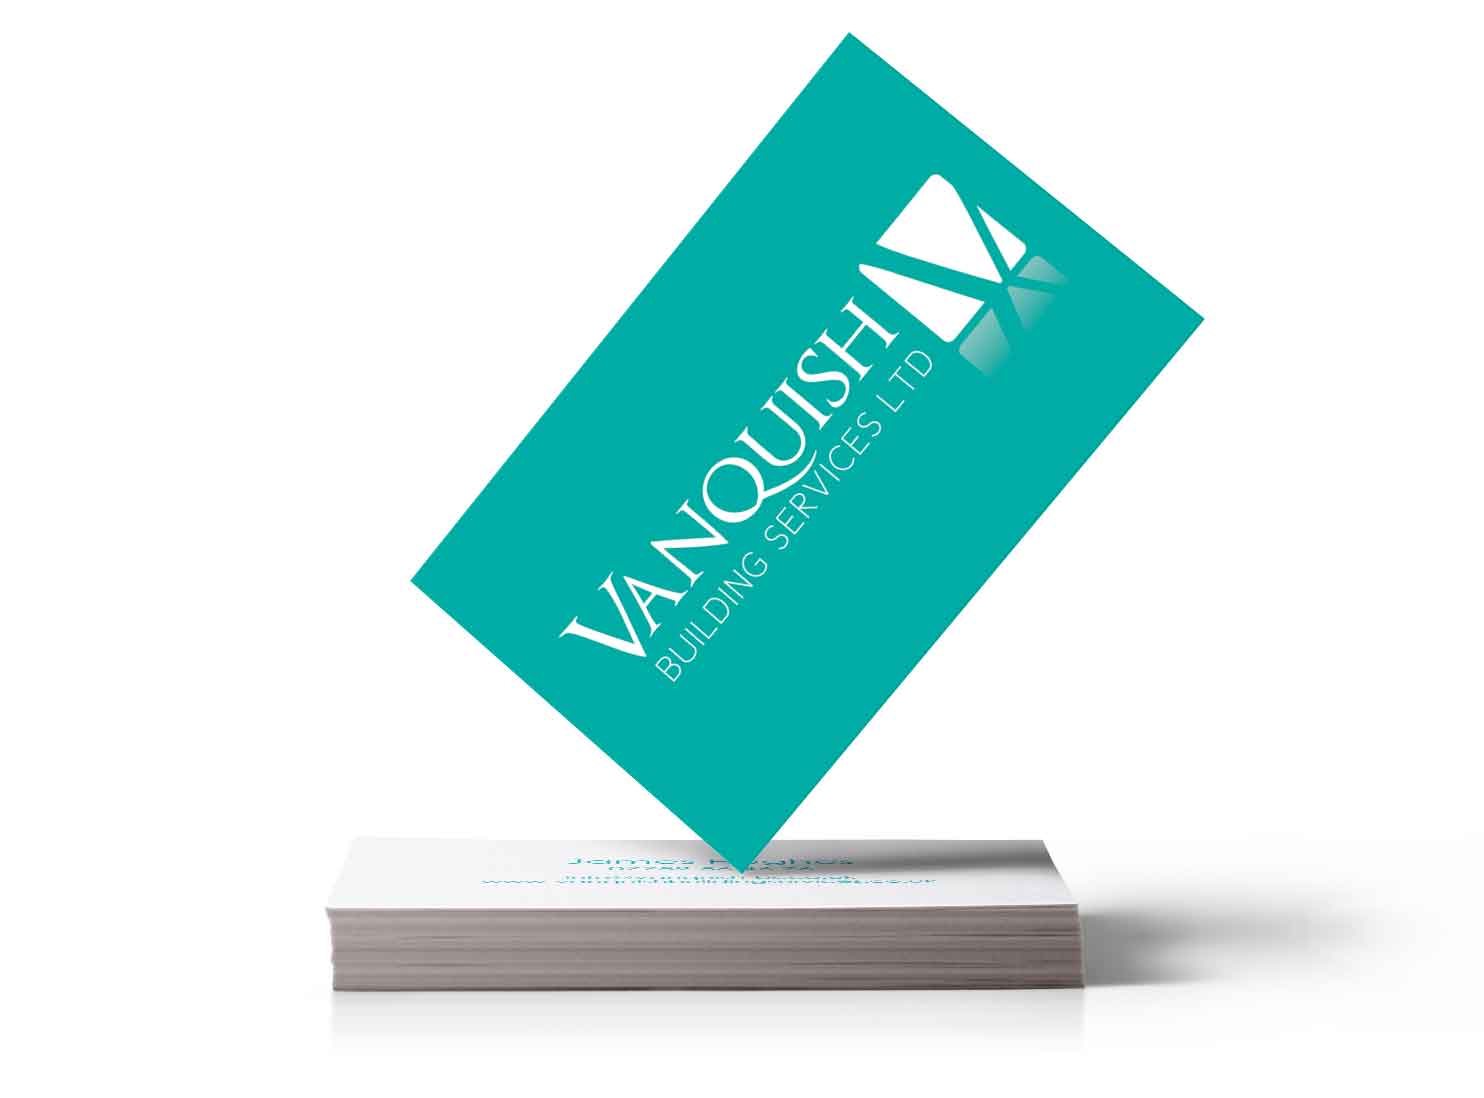 Vanquish Building Services business card design